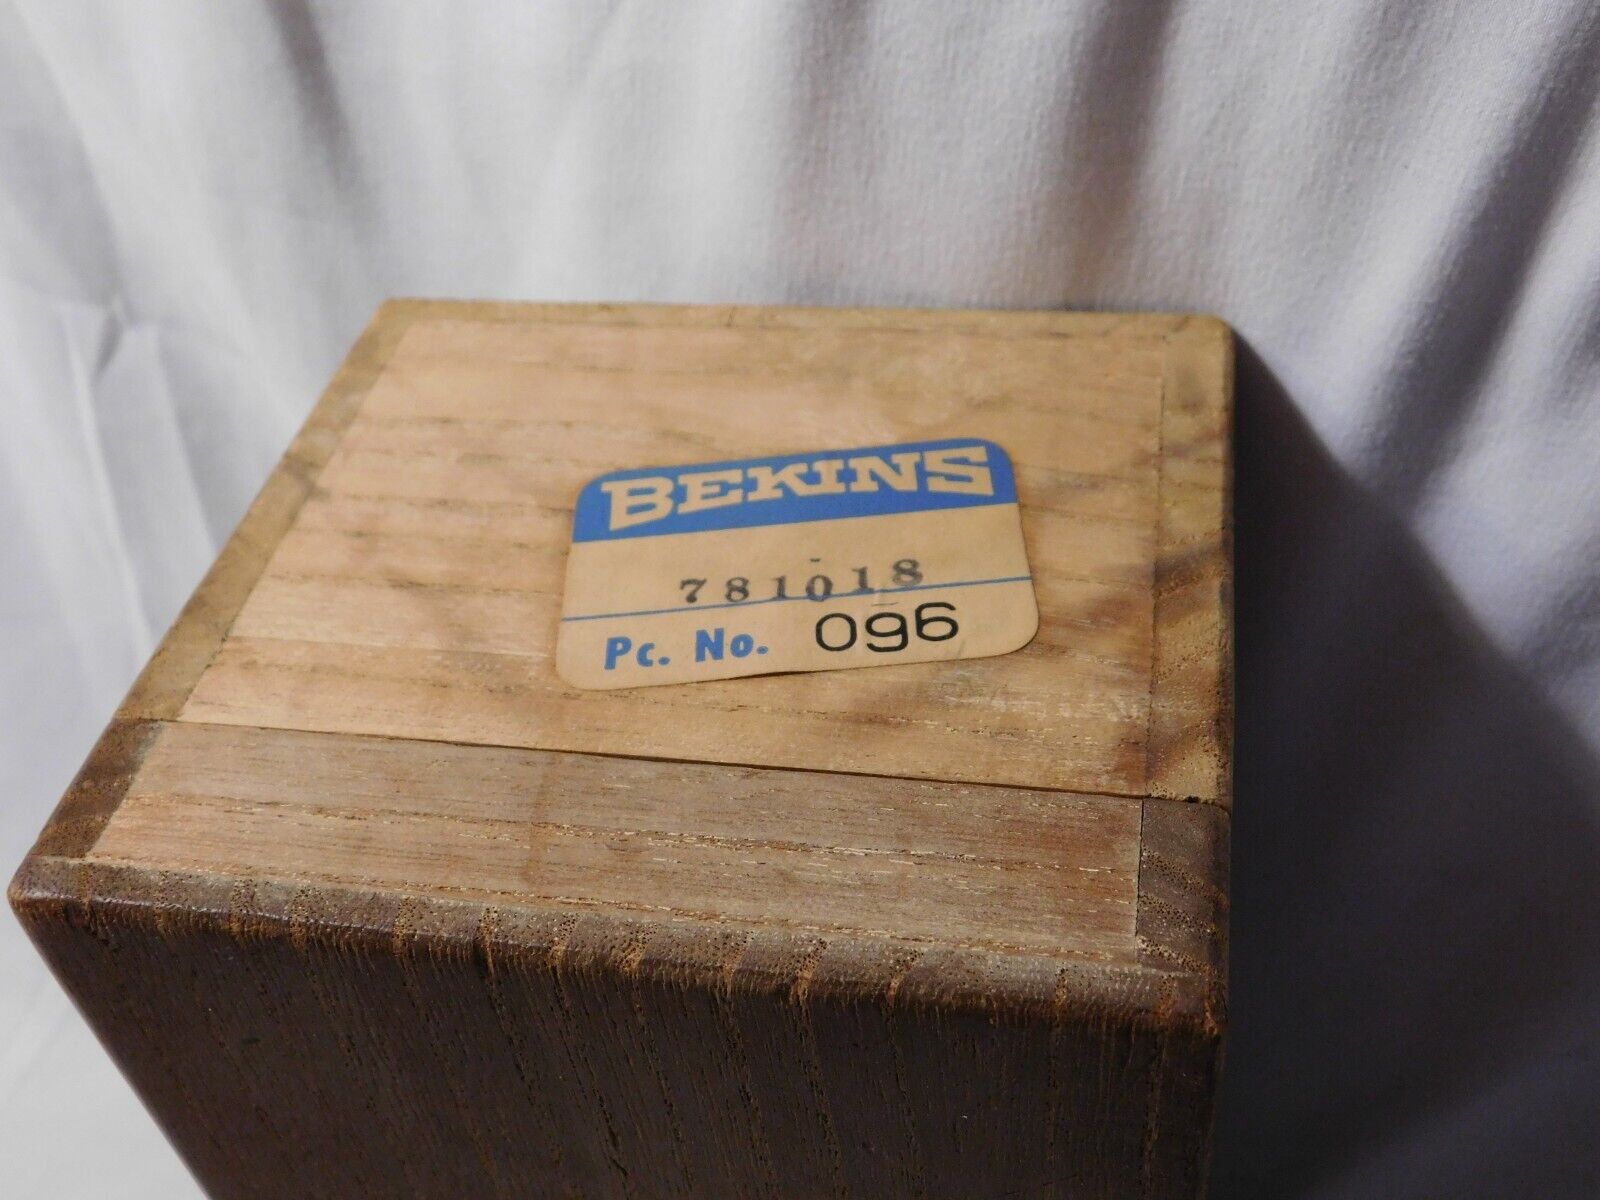 Vintage Wood Bekins Box with Yukan Yomiru and Collier\'s Magazine Ad